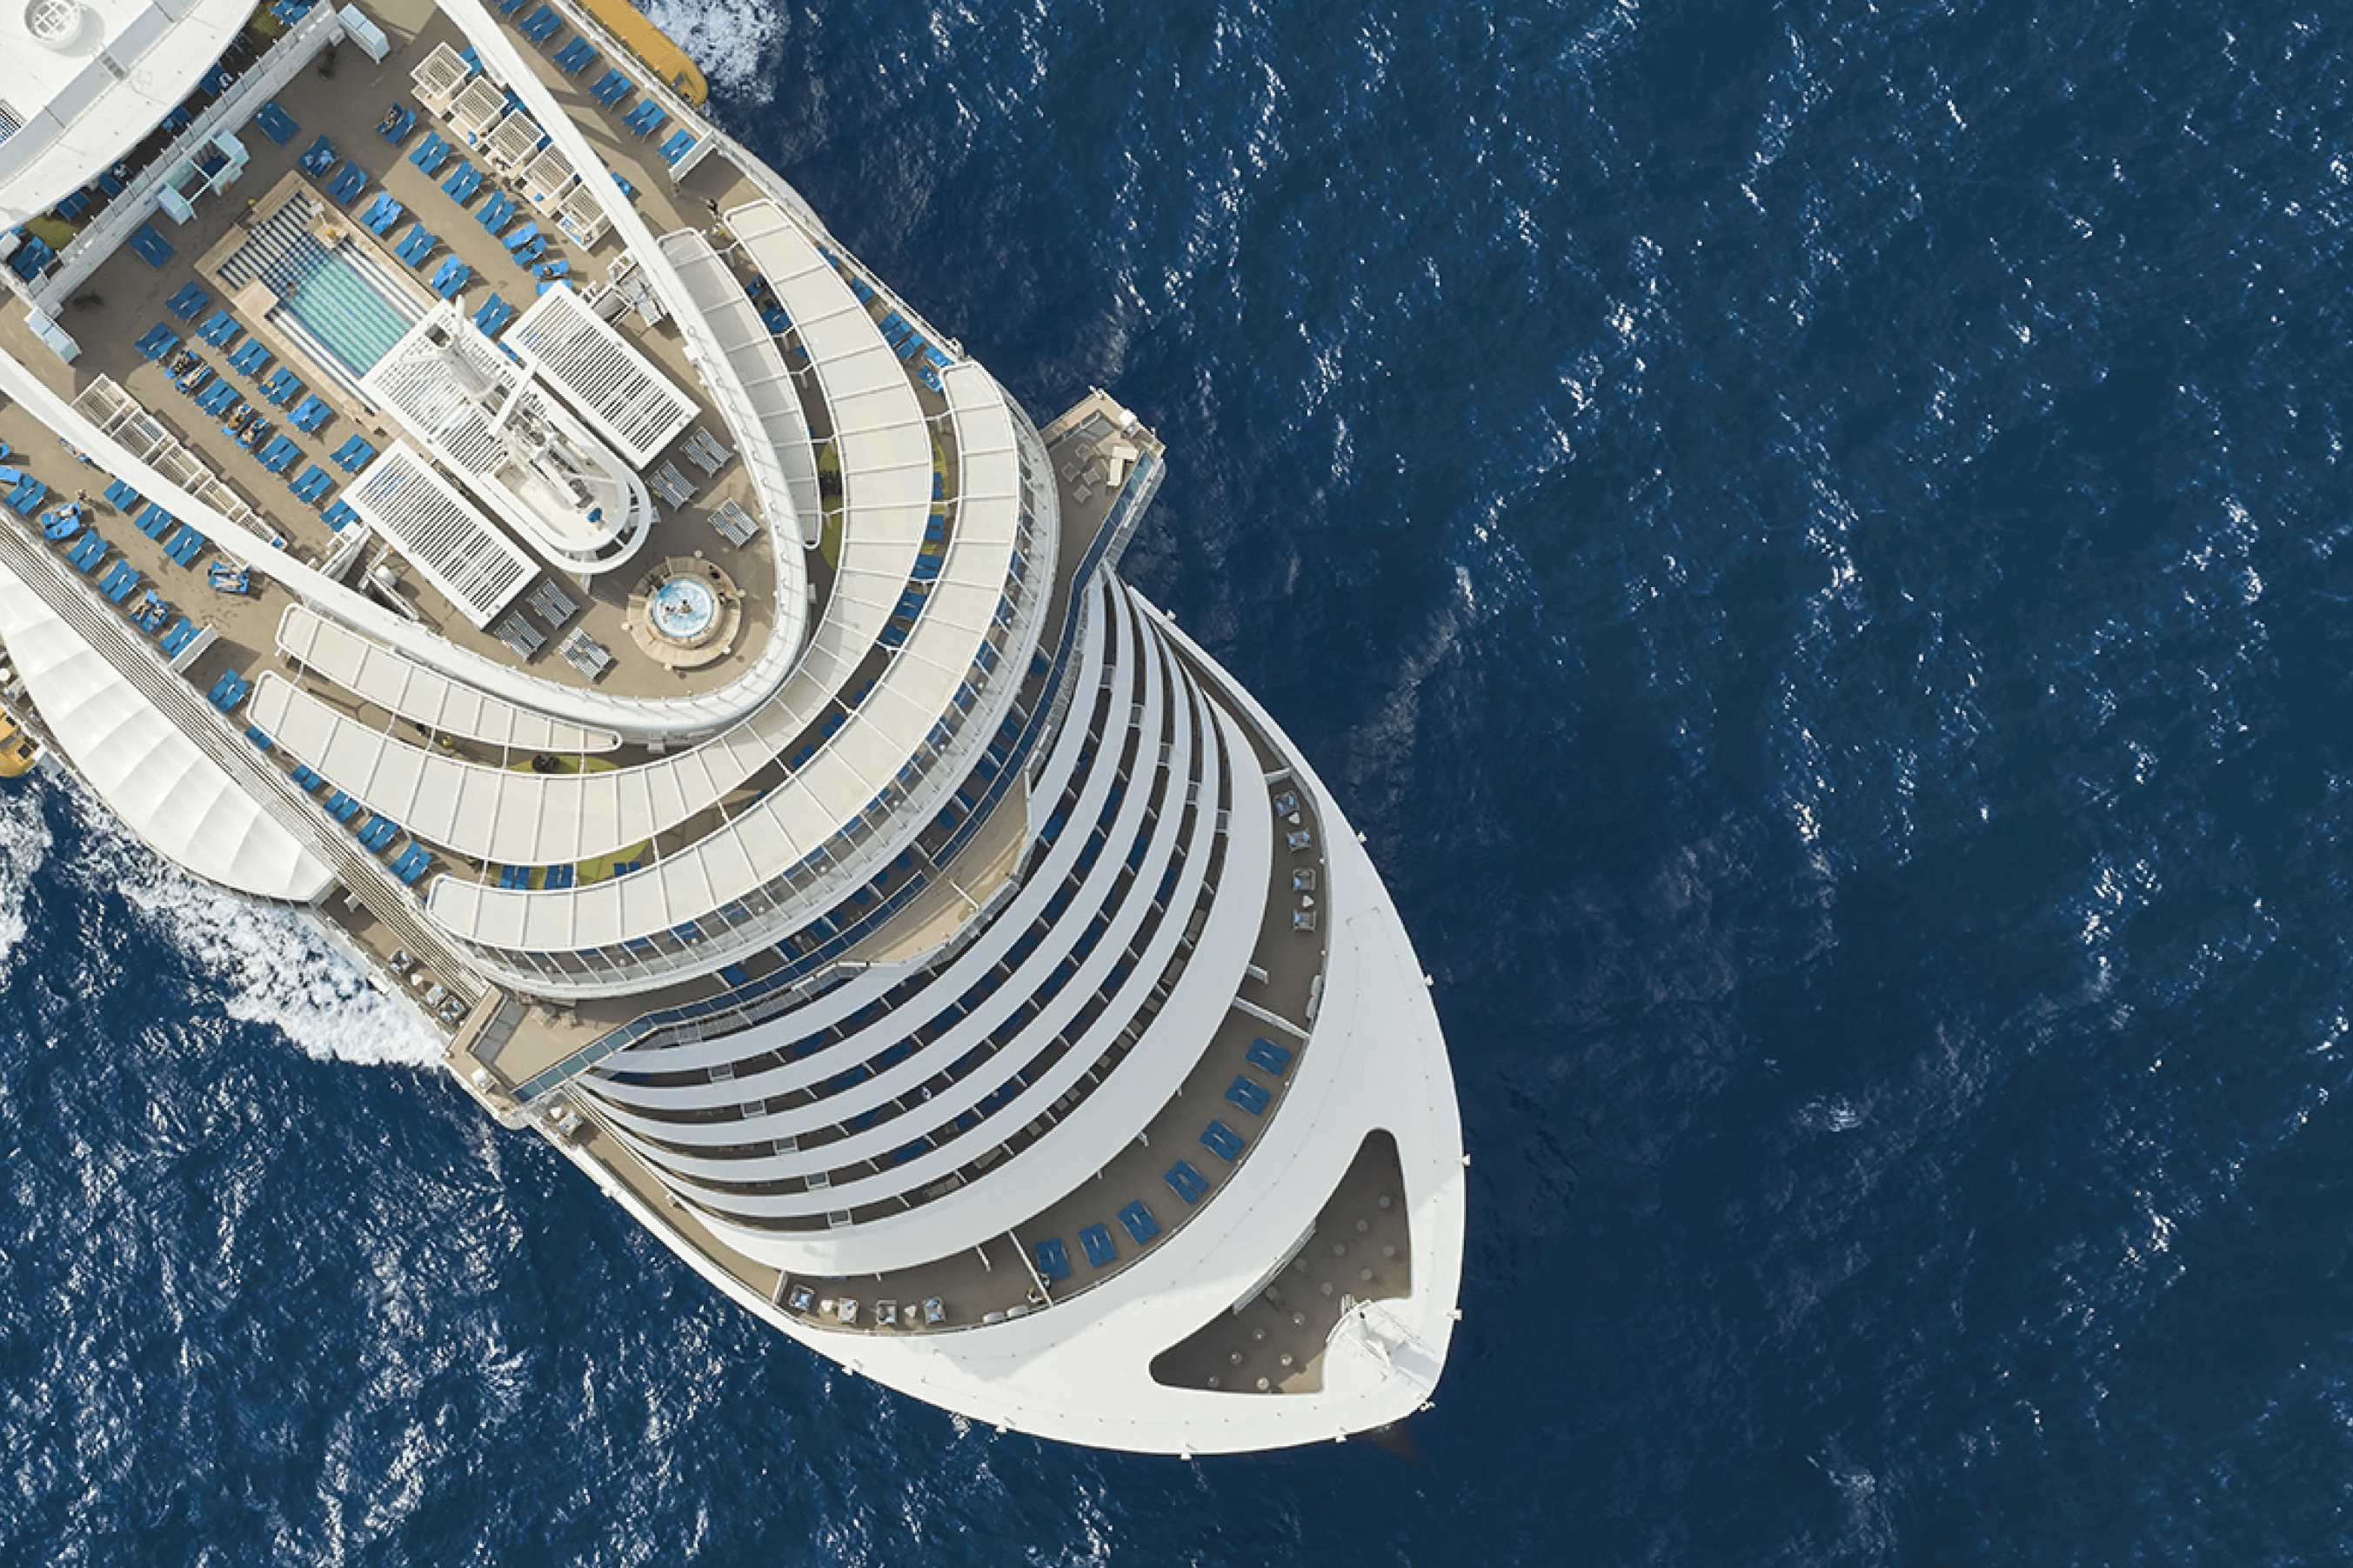 world biggest cruise ship